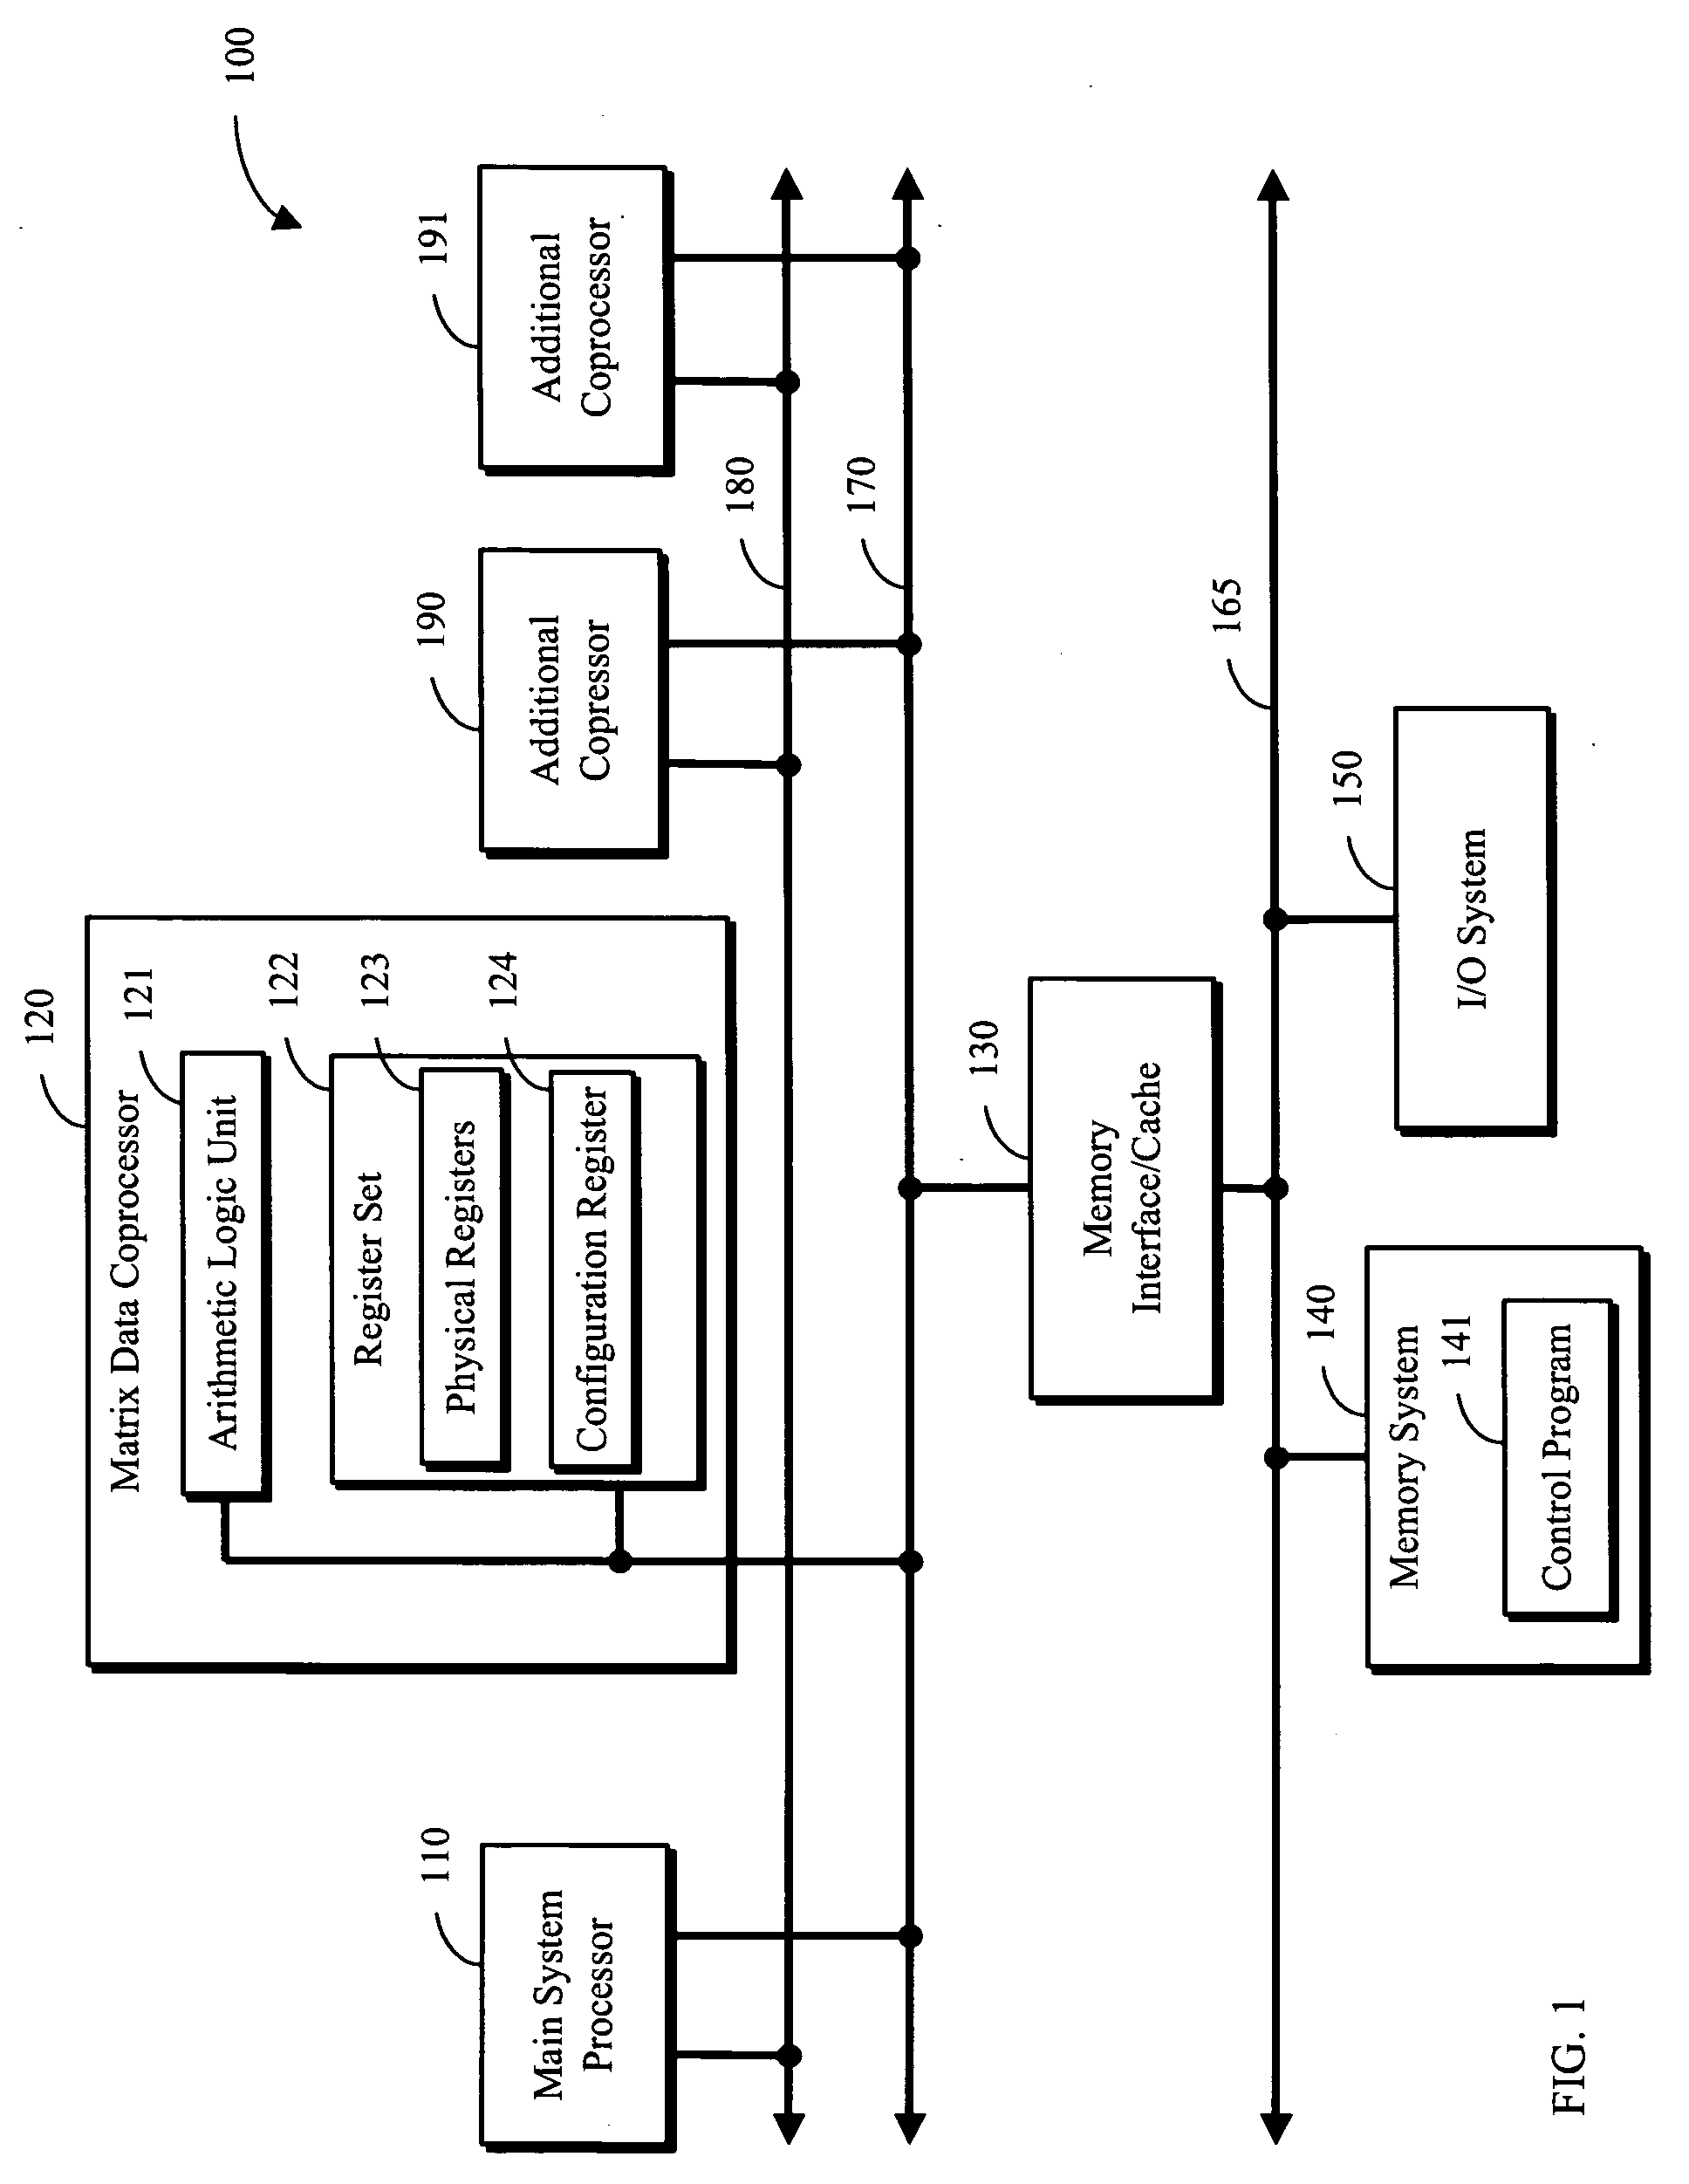 Apparatus and method for matrix data processing